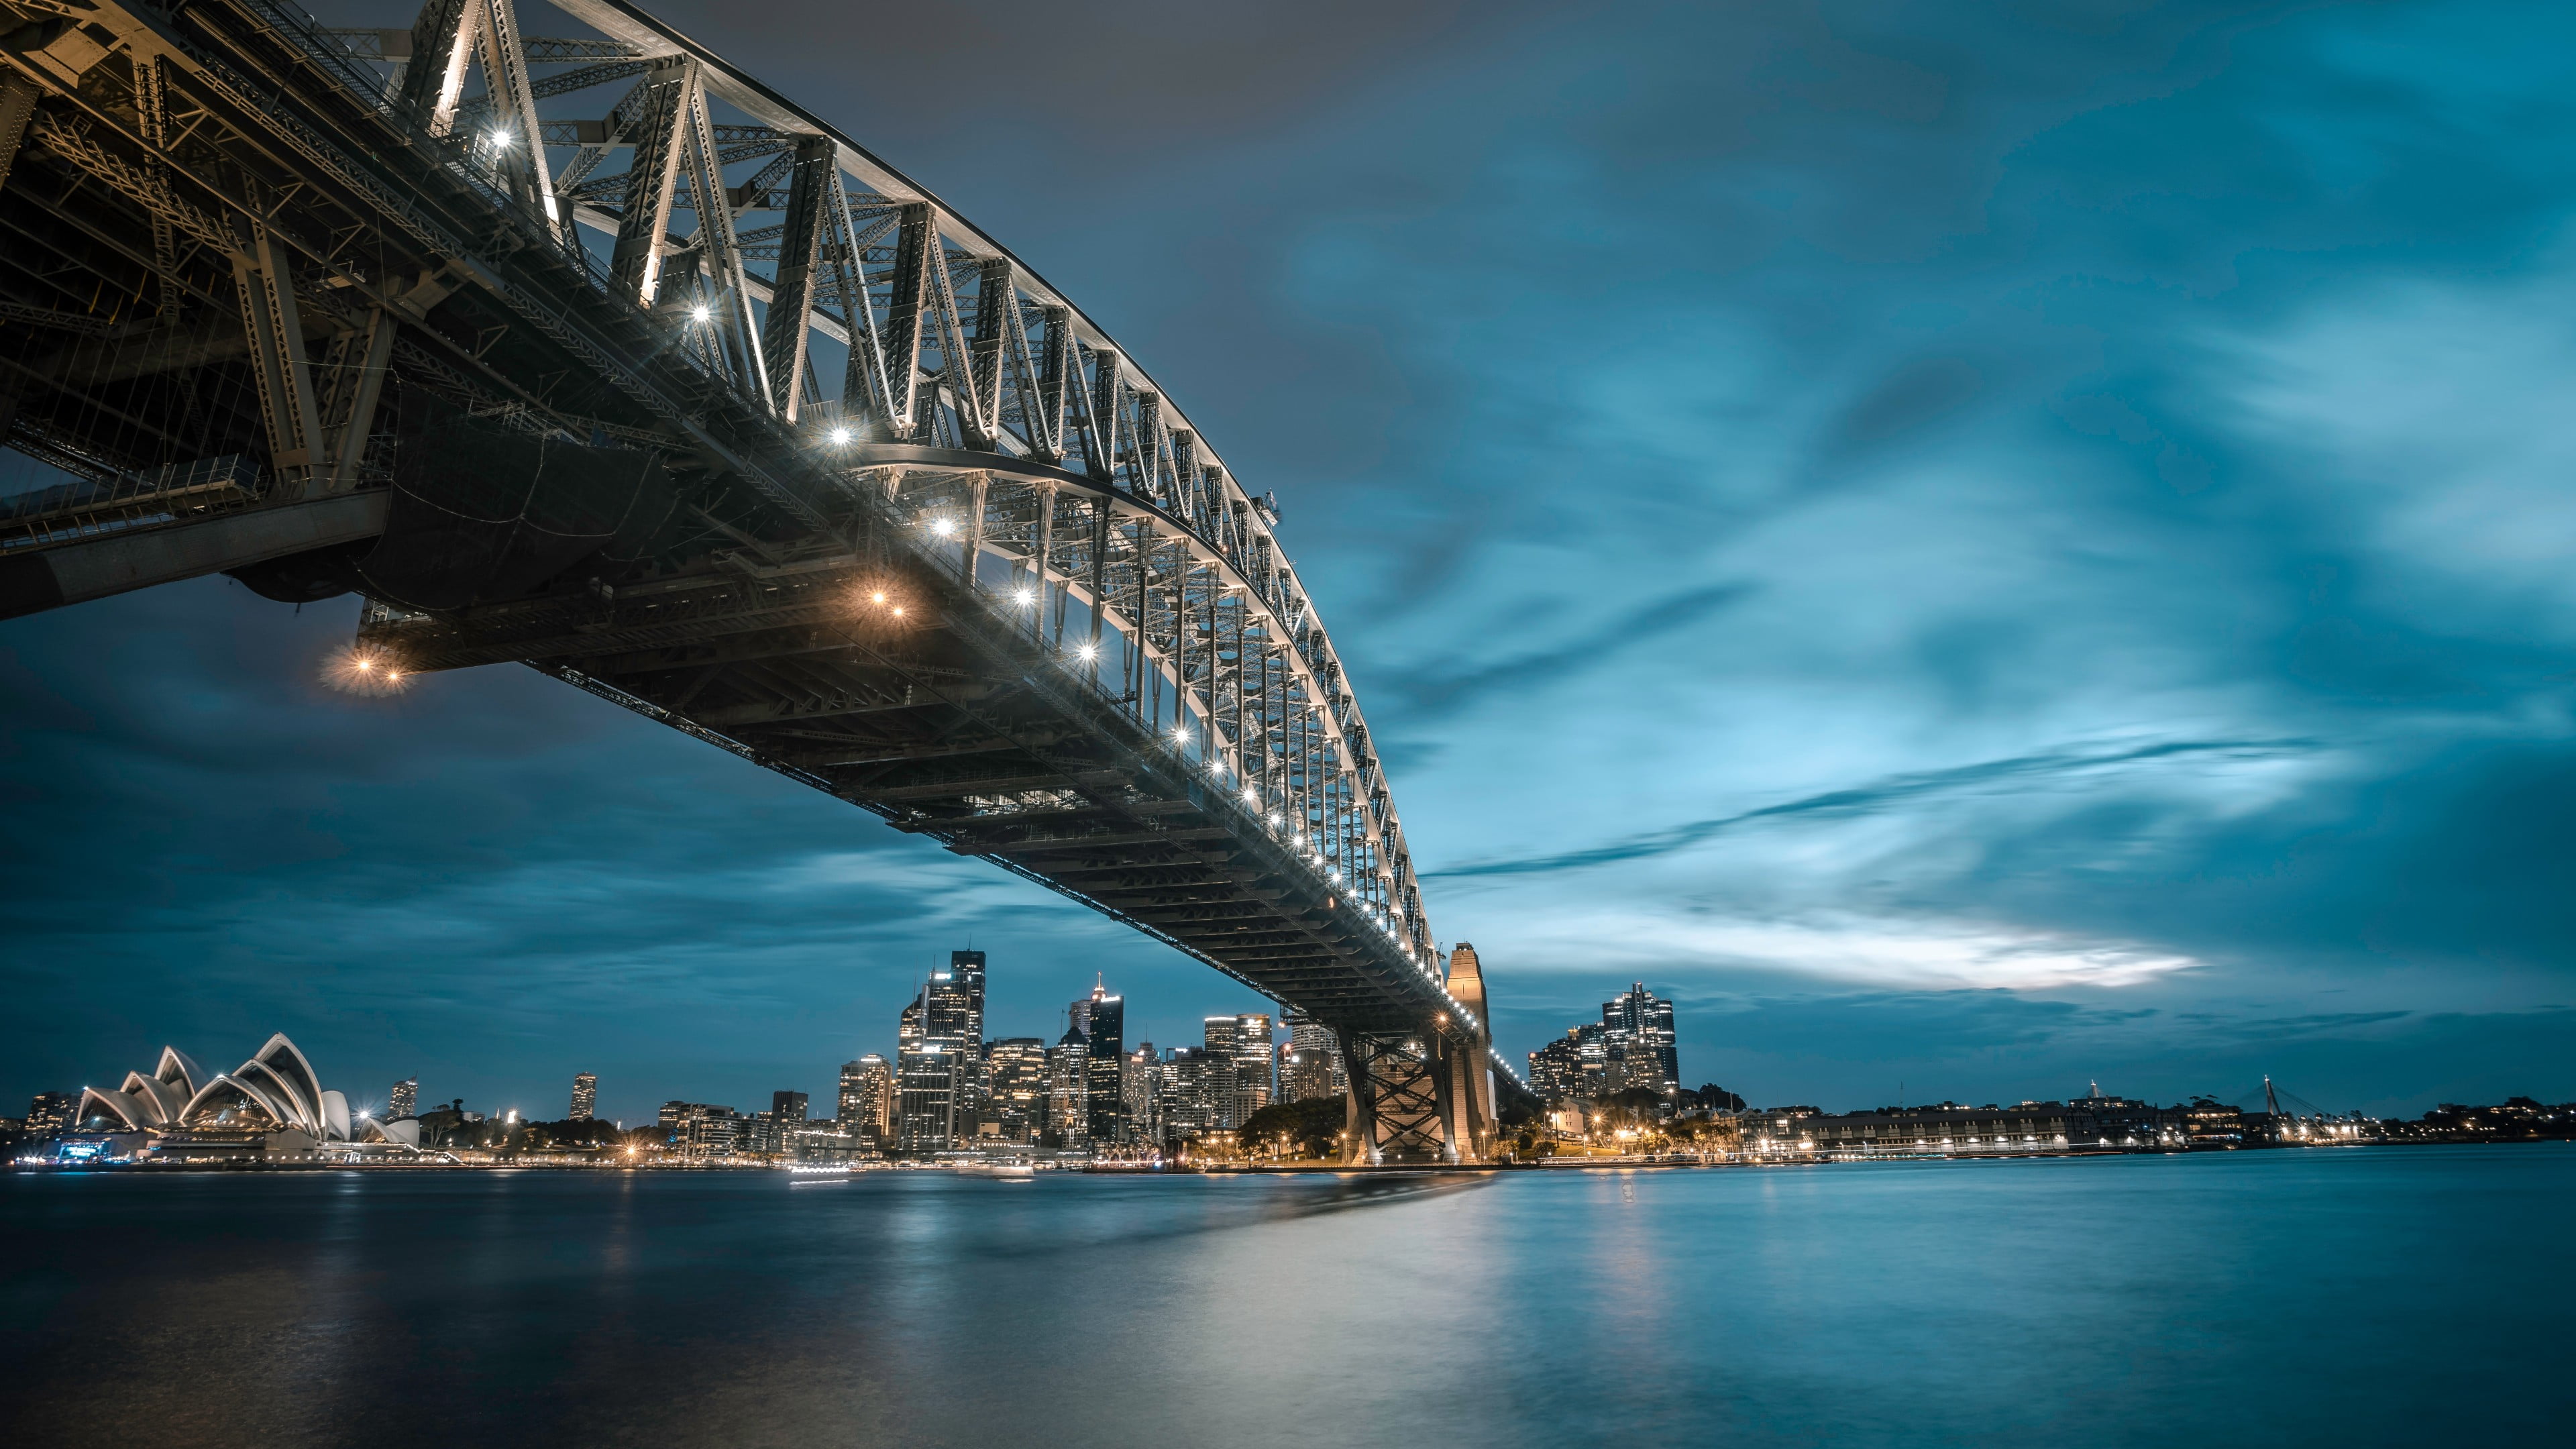 Sydney Harbor Bridge Sydney Ausralia Skyline Night Skyscrapers 4k Ultra Hd Wallpaper 3840×2160